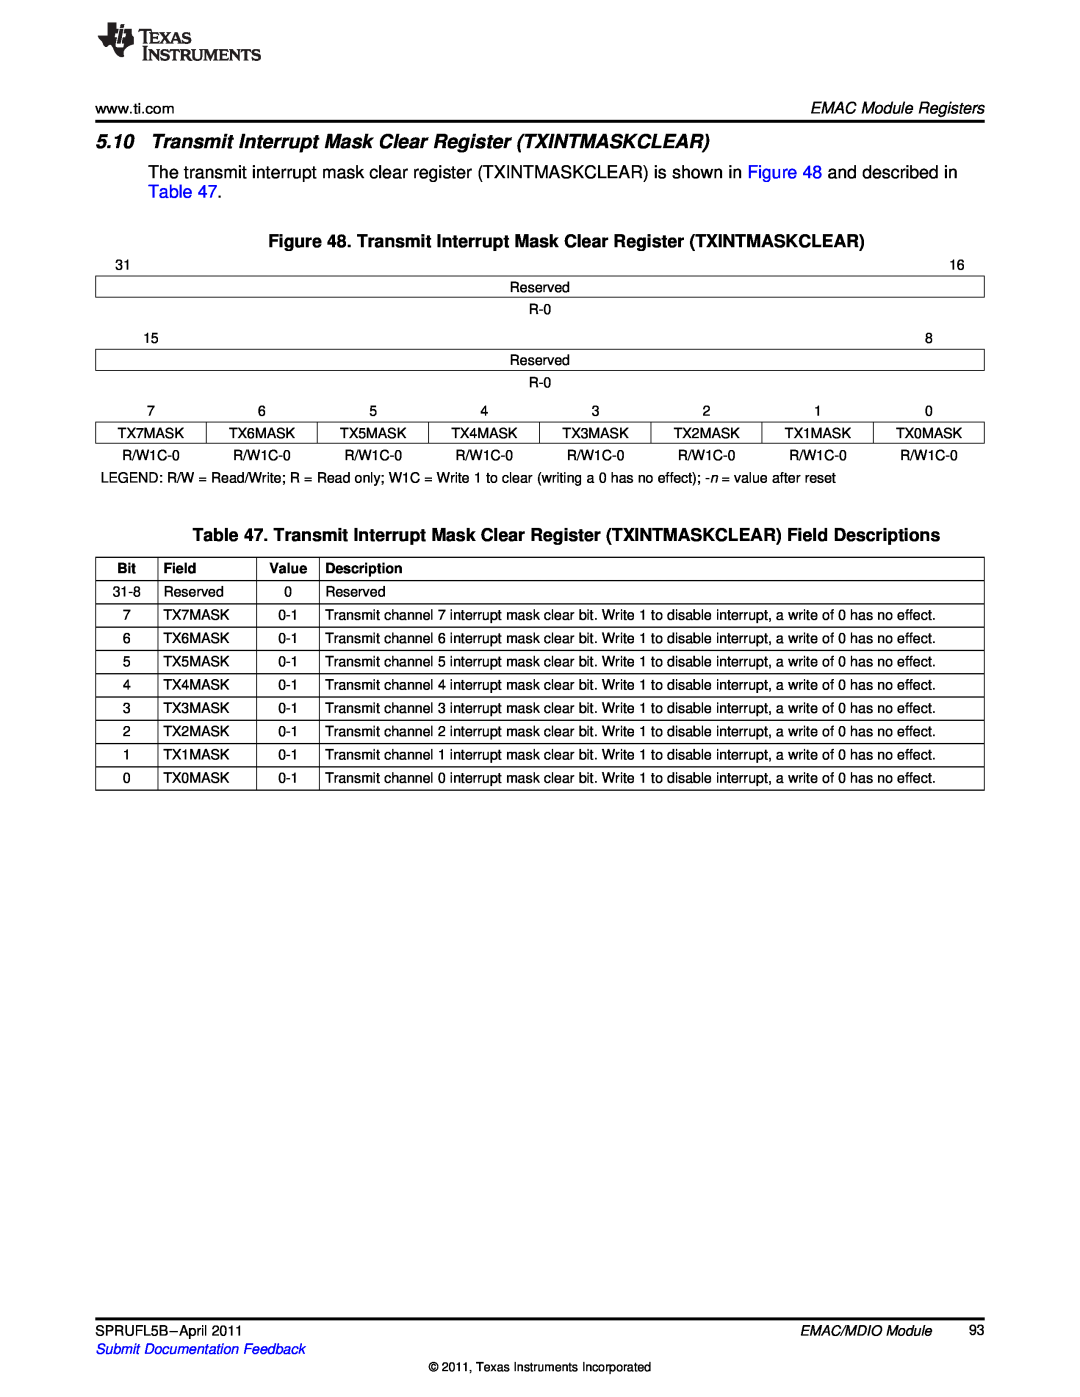 Texas Instruments TMS320C674X Transmit Interrupt Mask Clear Register TXINTMASKCLEAR, EMAC Module Registers, Field, Value 